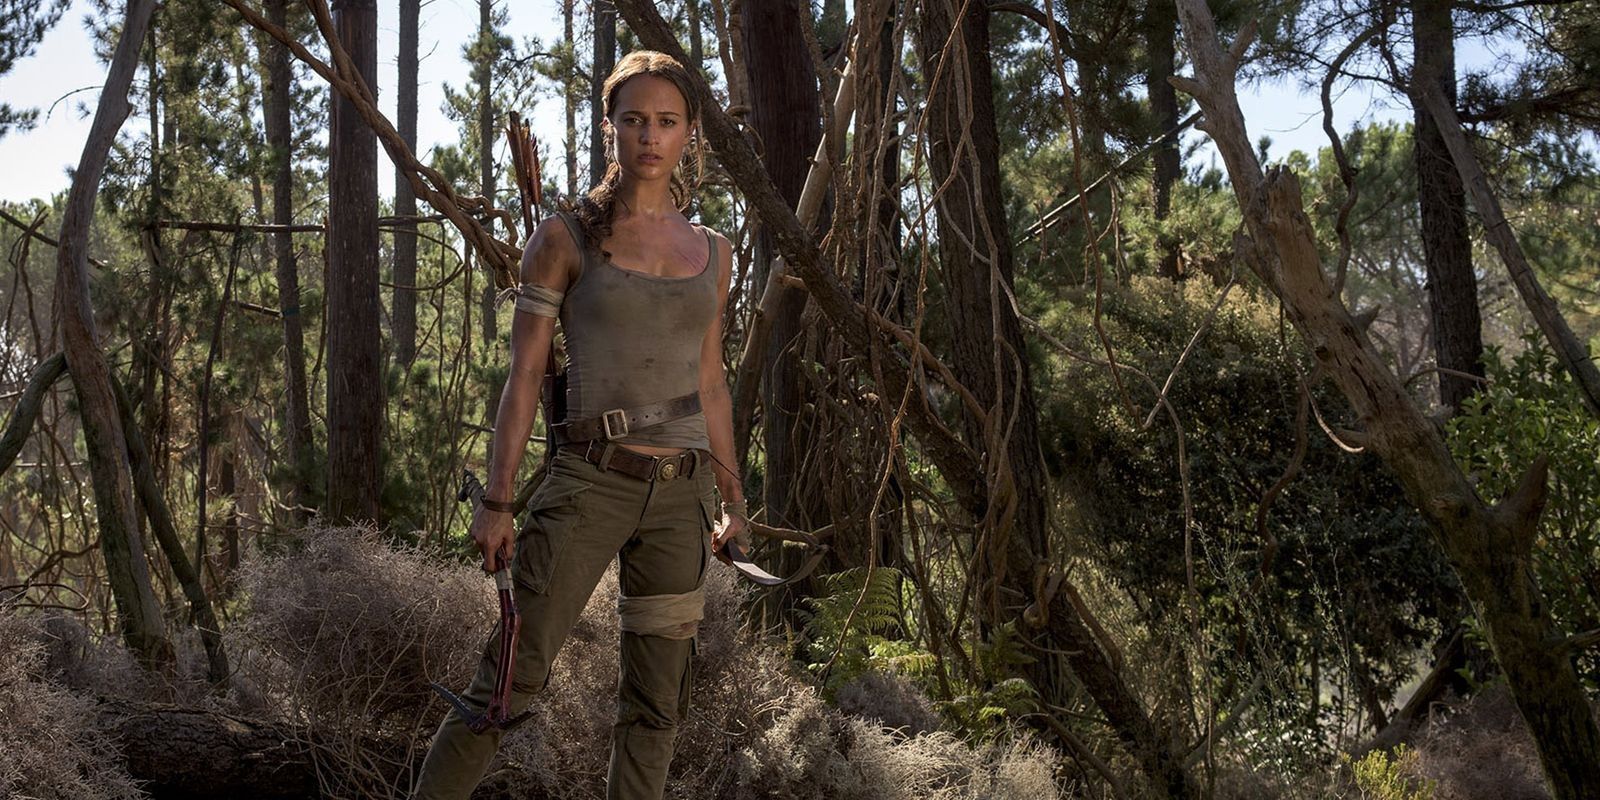 Alicia Vikander as Lara Croft in the new Tomb Raider movie